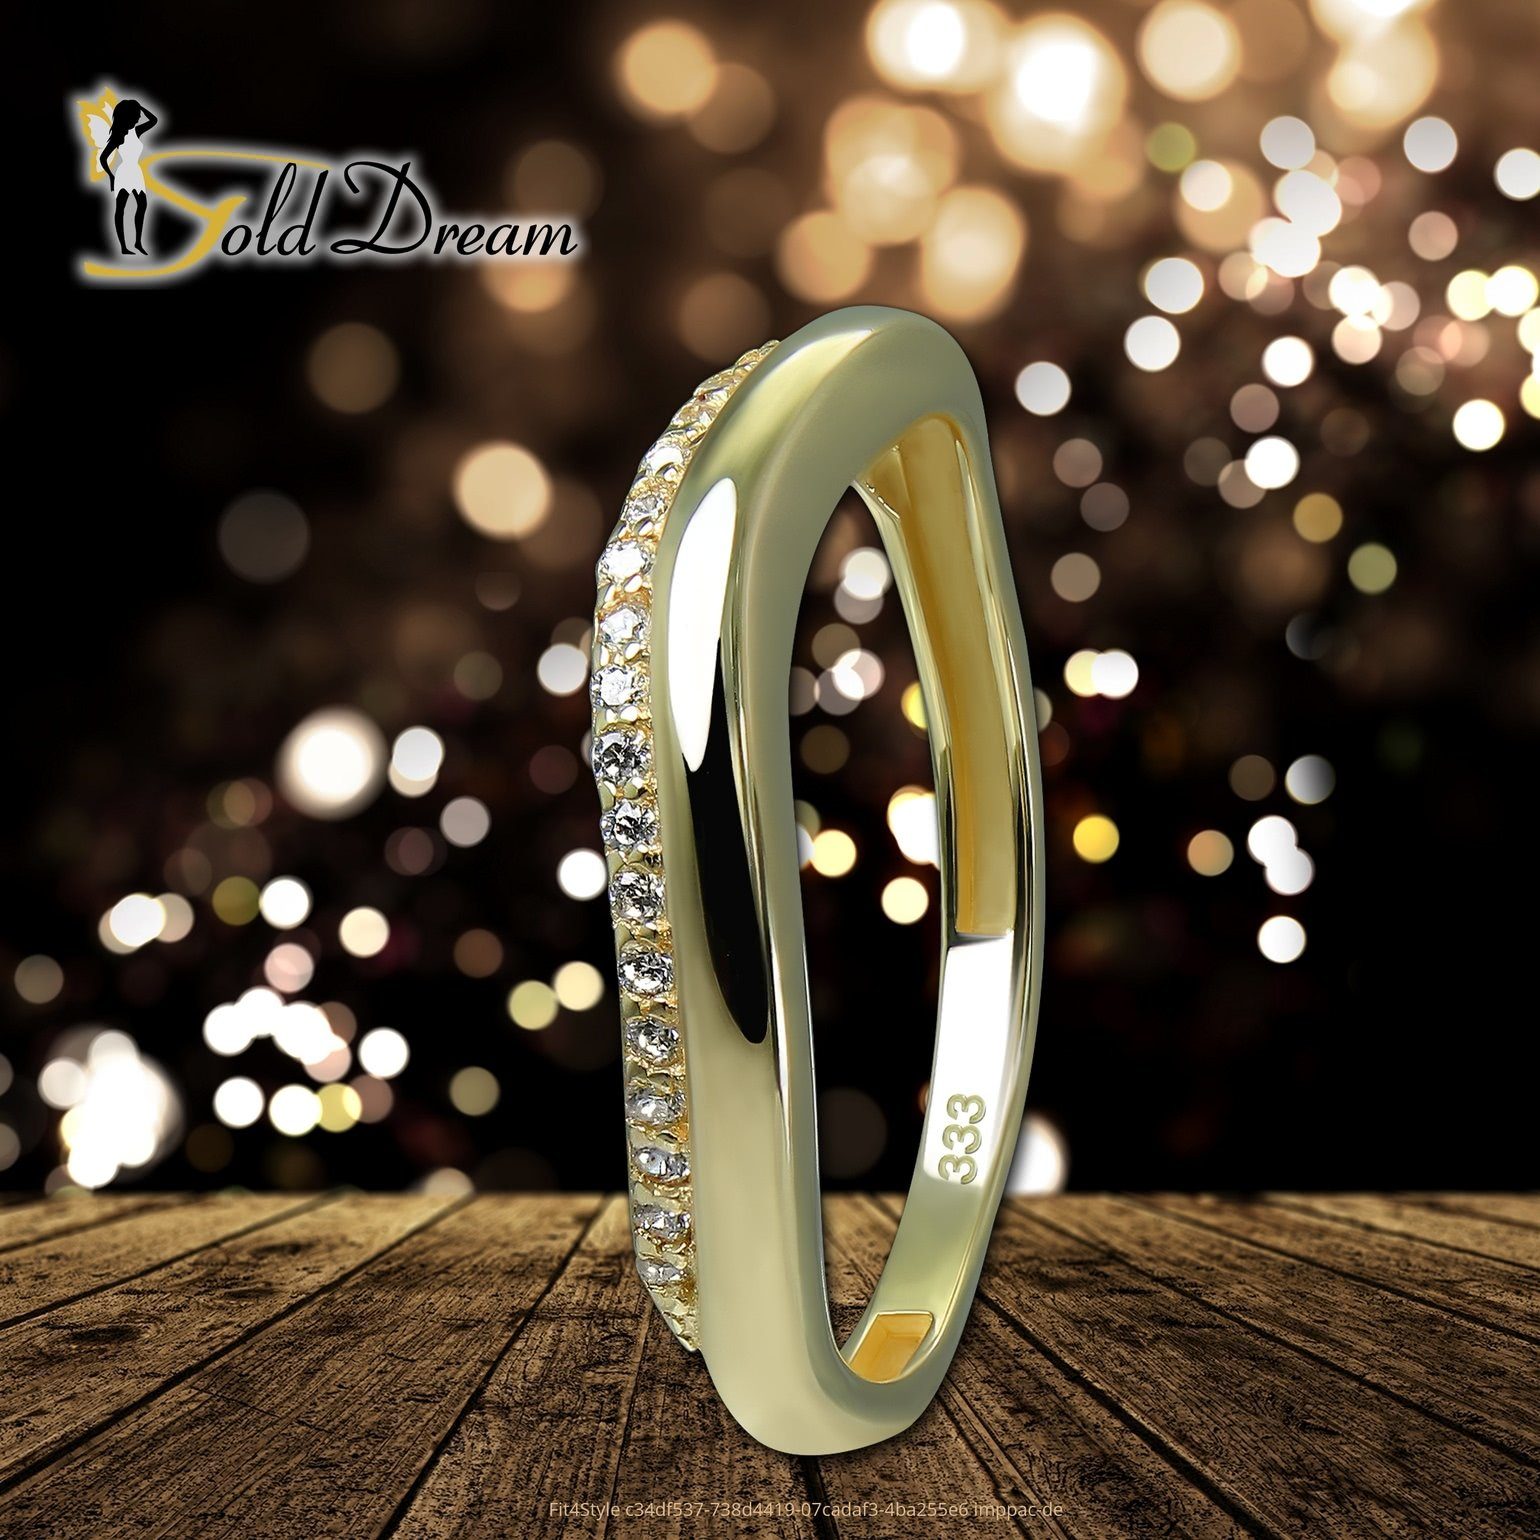 8 Damen Gelbgold Welle Ring Gold Ring gold, Zirkonia GoldDream Gr.54 - (Fingerring), GoldDream Karat, weiß Farbe: 333 Goldring Welle